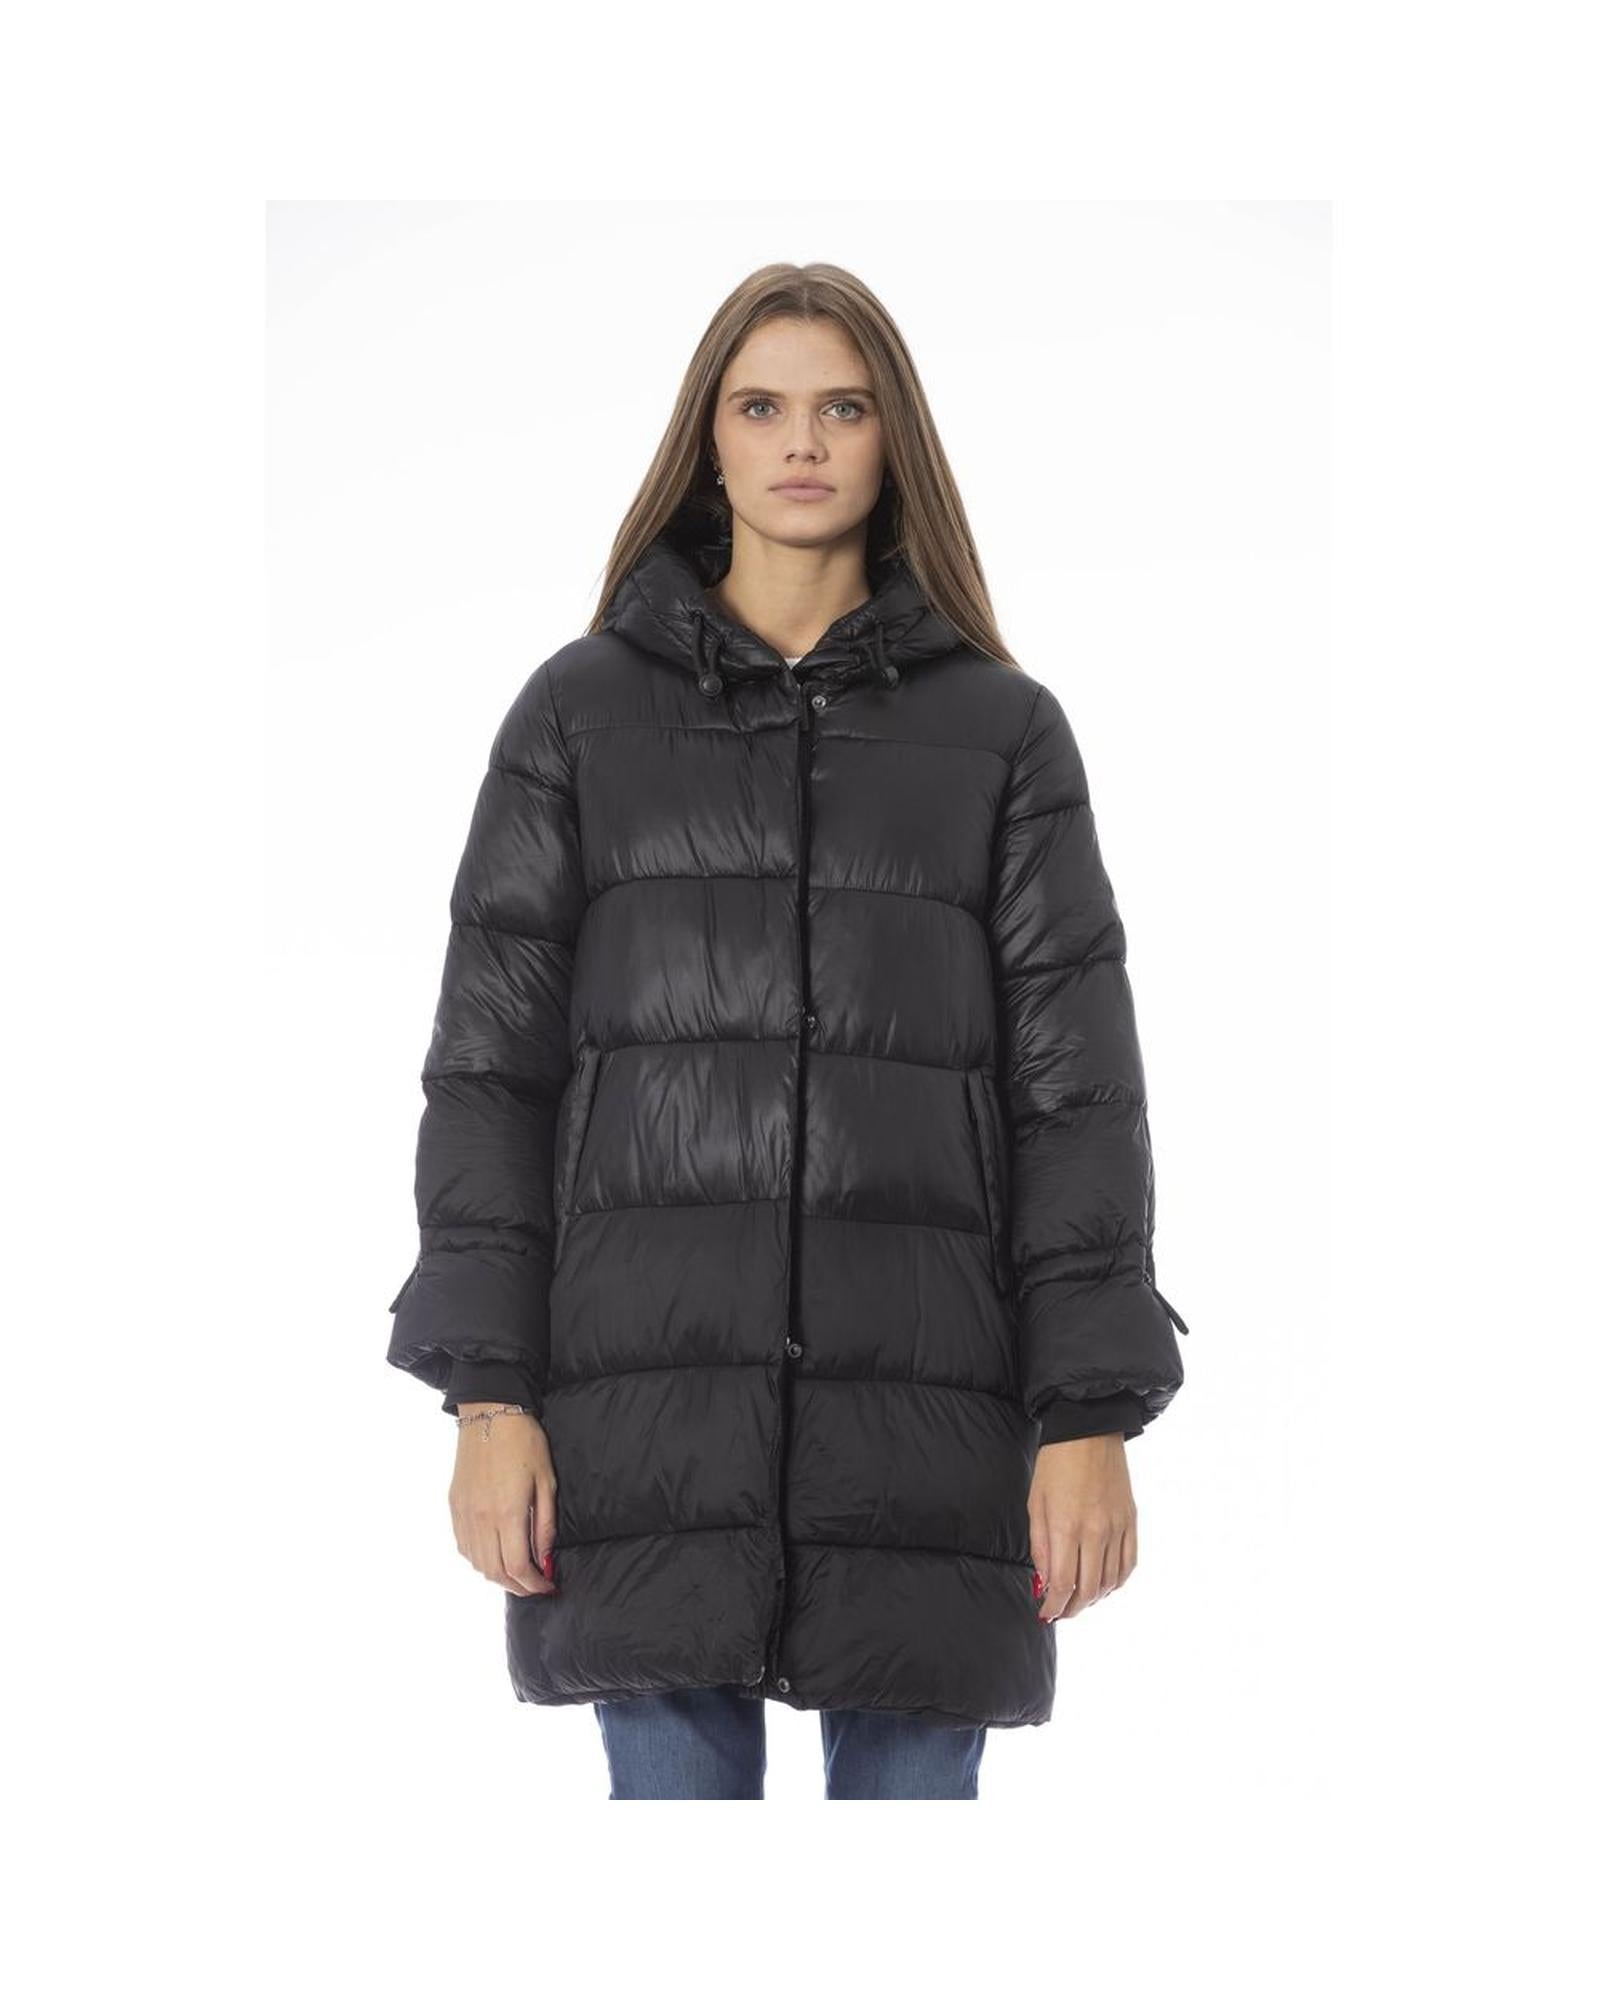 Women's Black Nylon Jackets & Coat - L